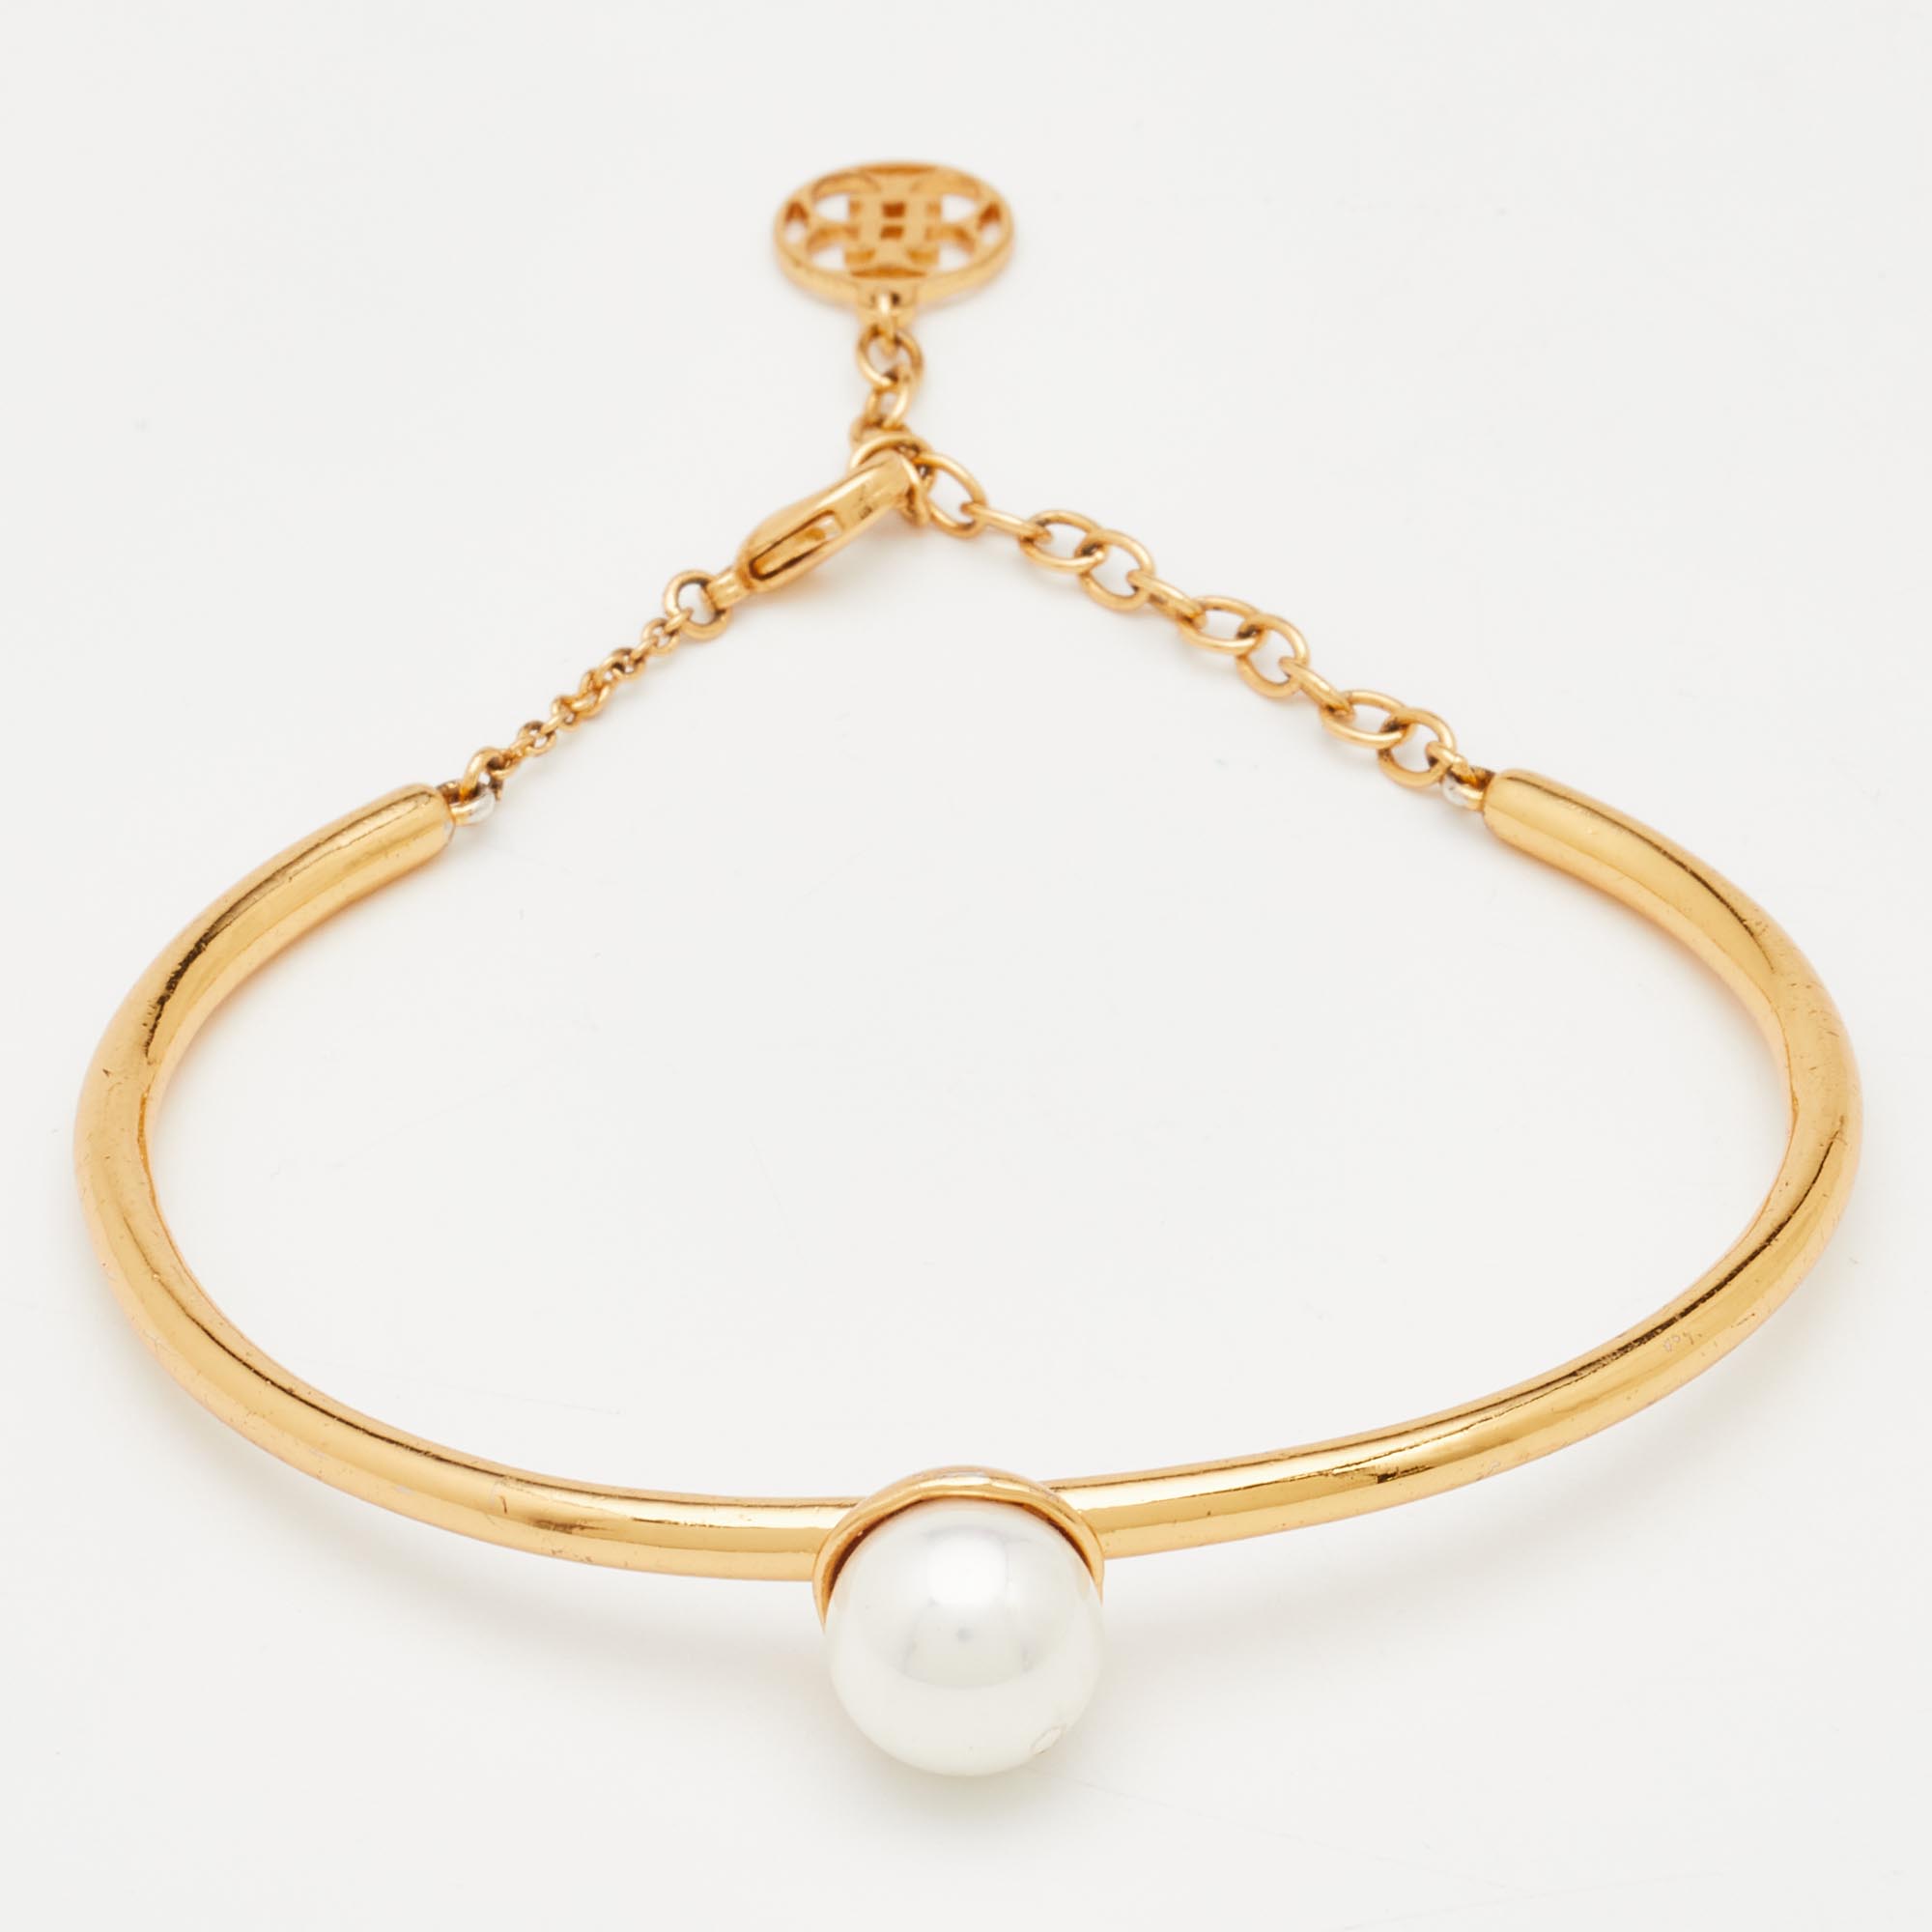 Carolina Herrera Bow & Bead Bracelet - Clear, Gold-Tone Metal Charm,  Bracelets - CAO95756 | The RealReal